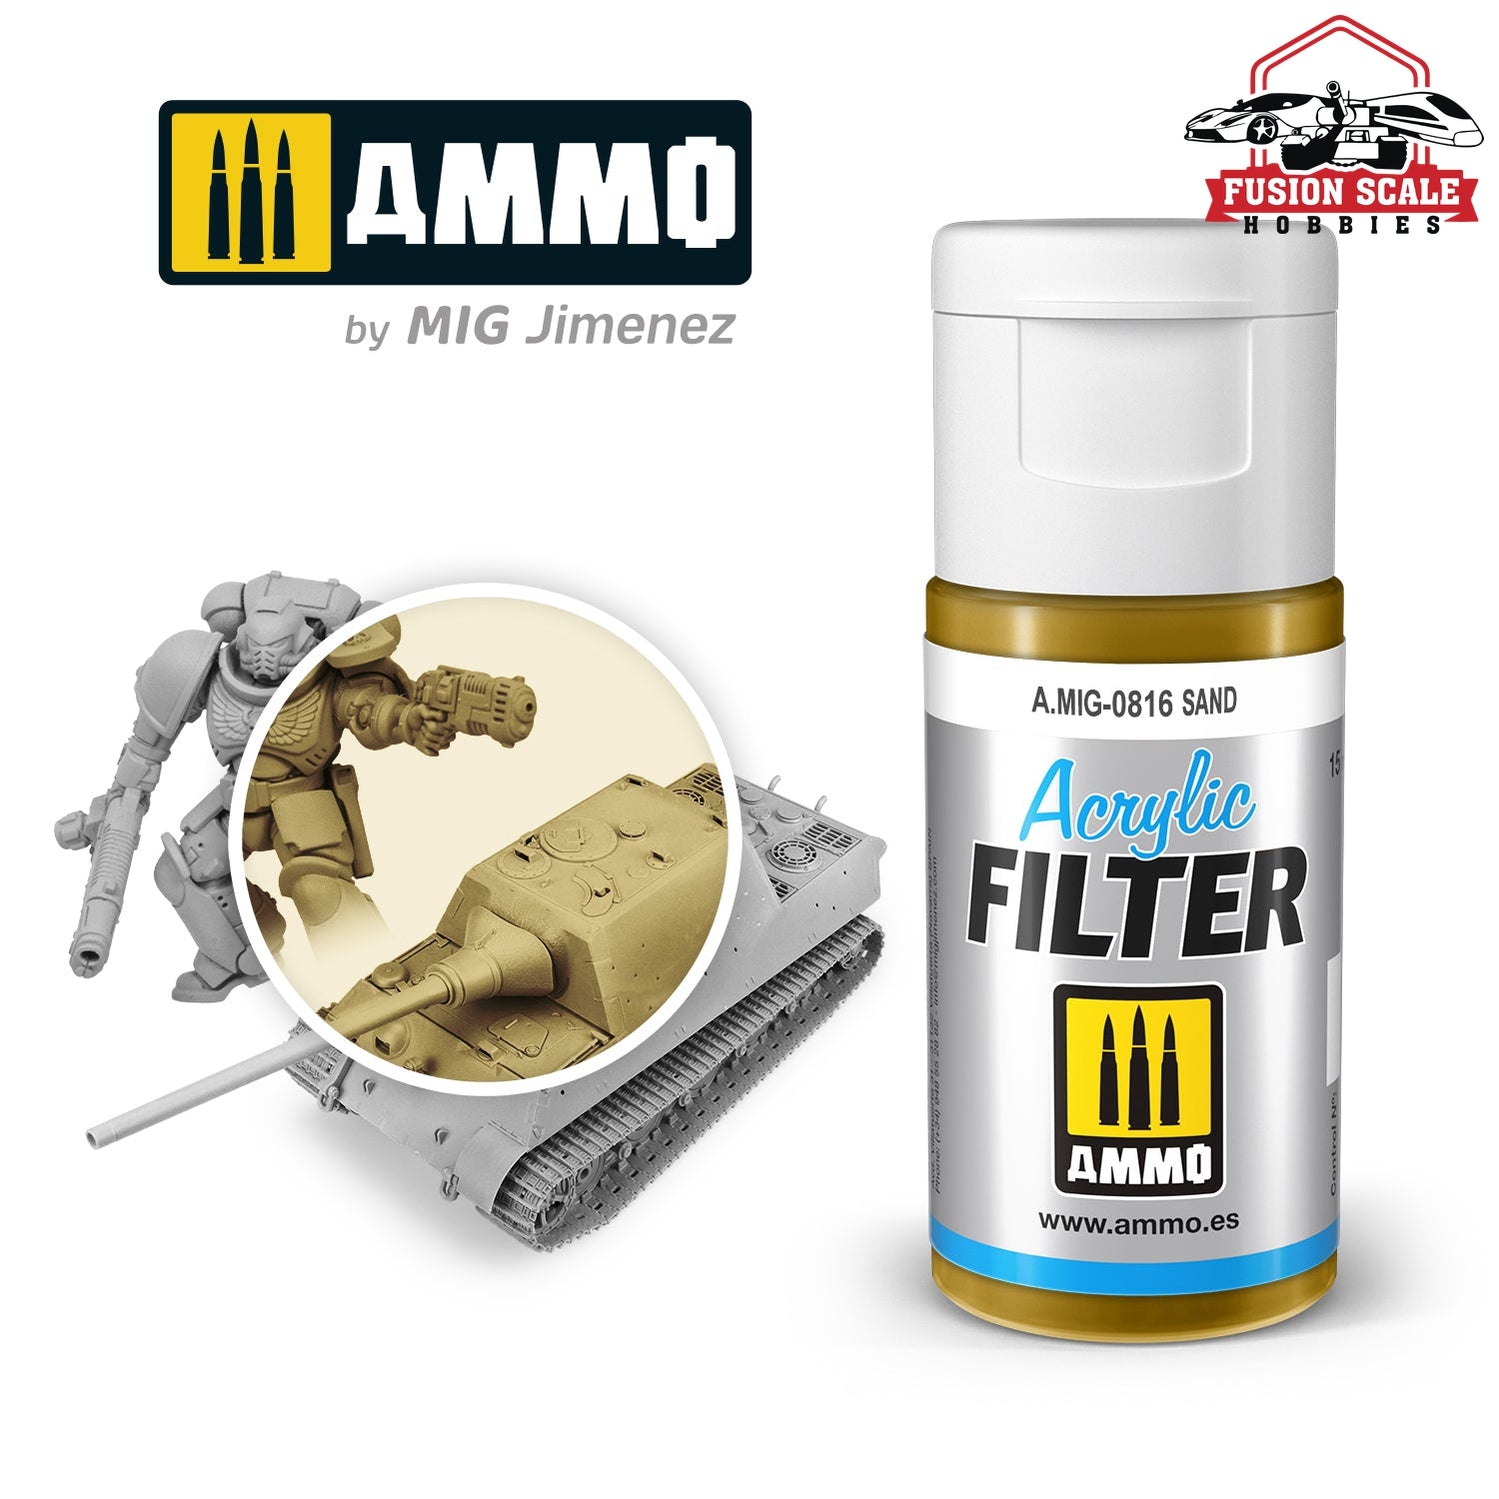 Ammo Mig Jimenez Acrylic Filter Sand - Fusion Scale Hobbies